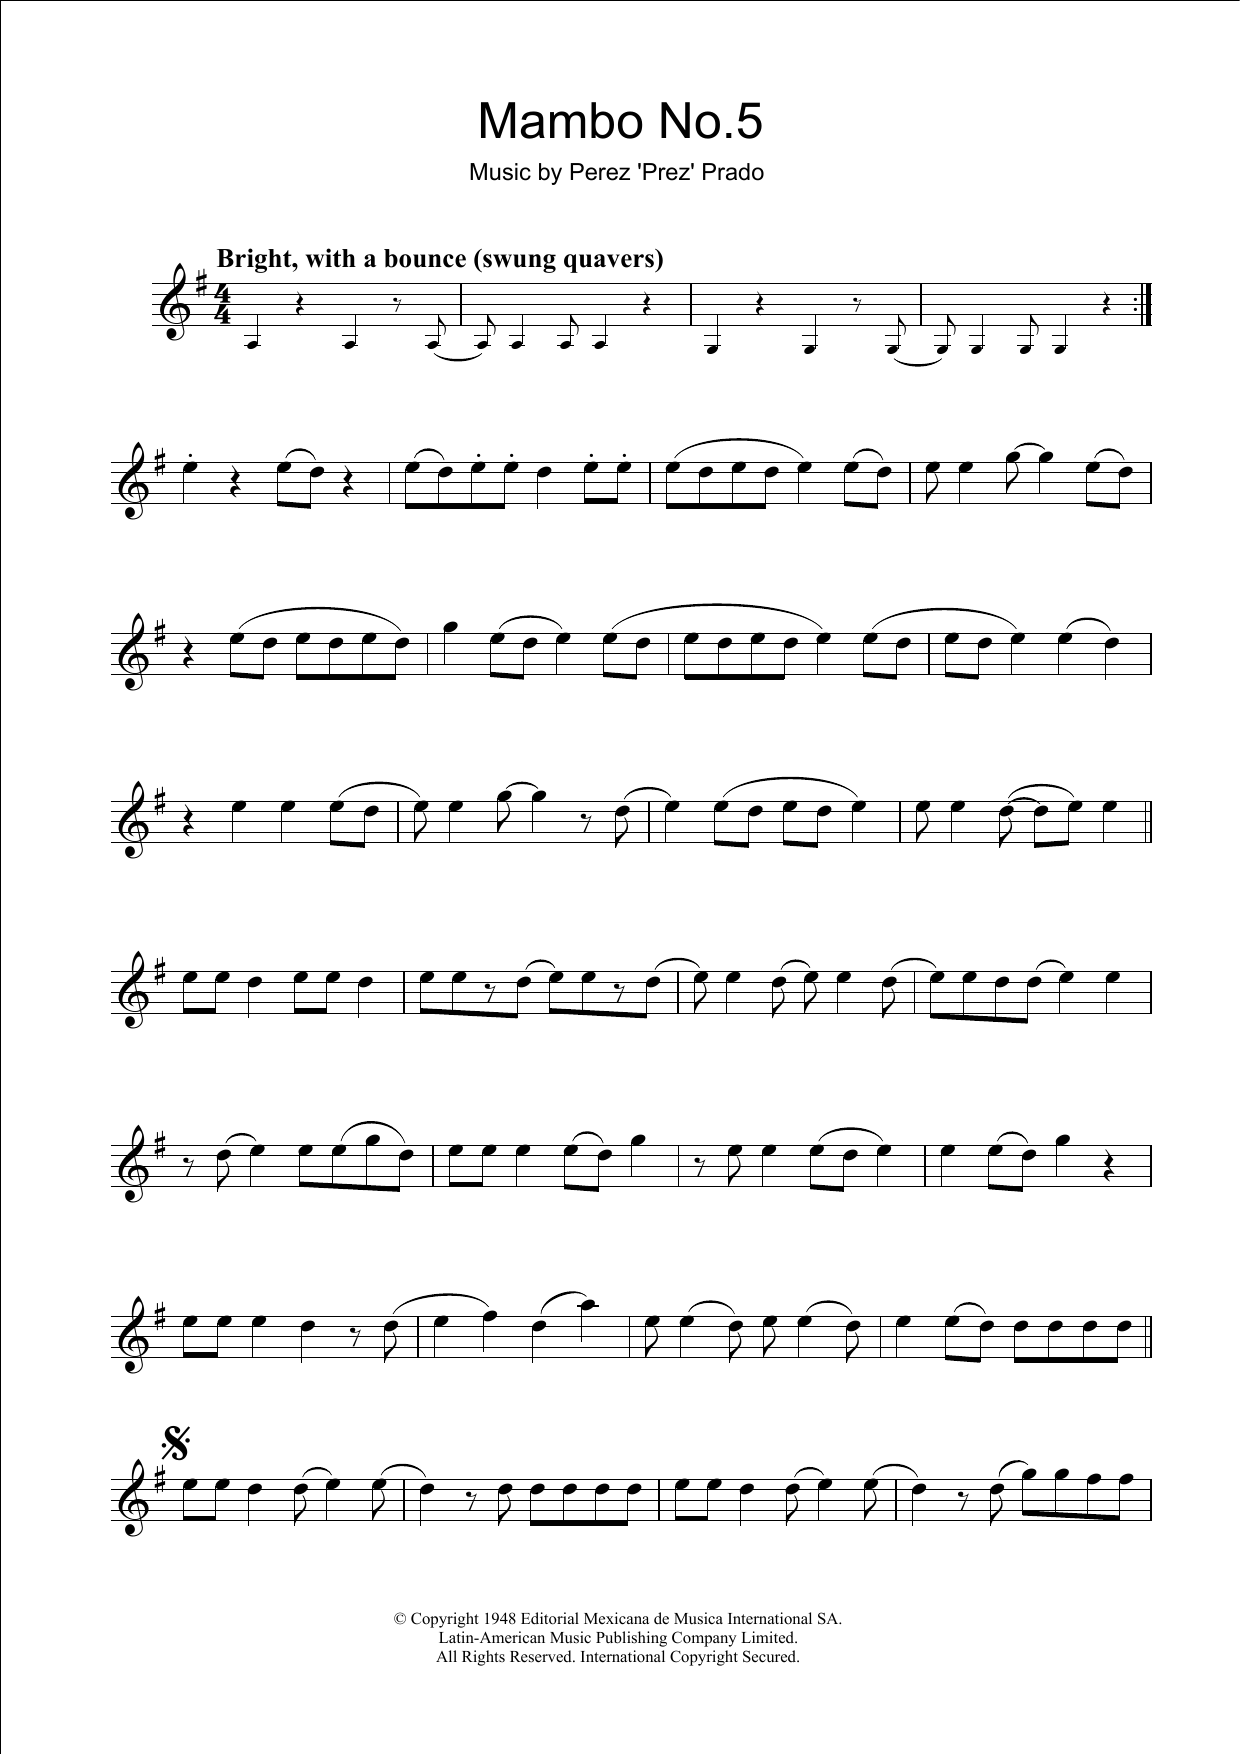 Perez Prado Mambo No. 5 Sheet Music Notes & Chords for Clarinet - Download or Print PDF